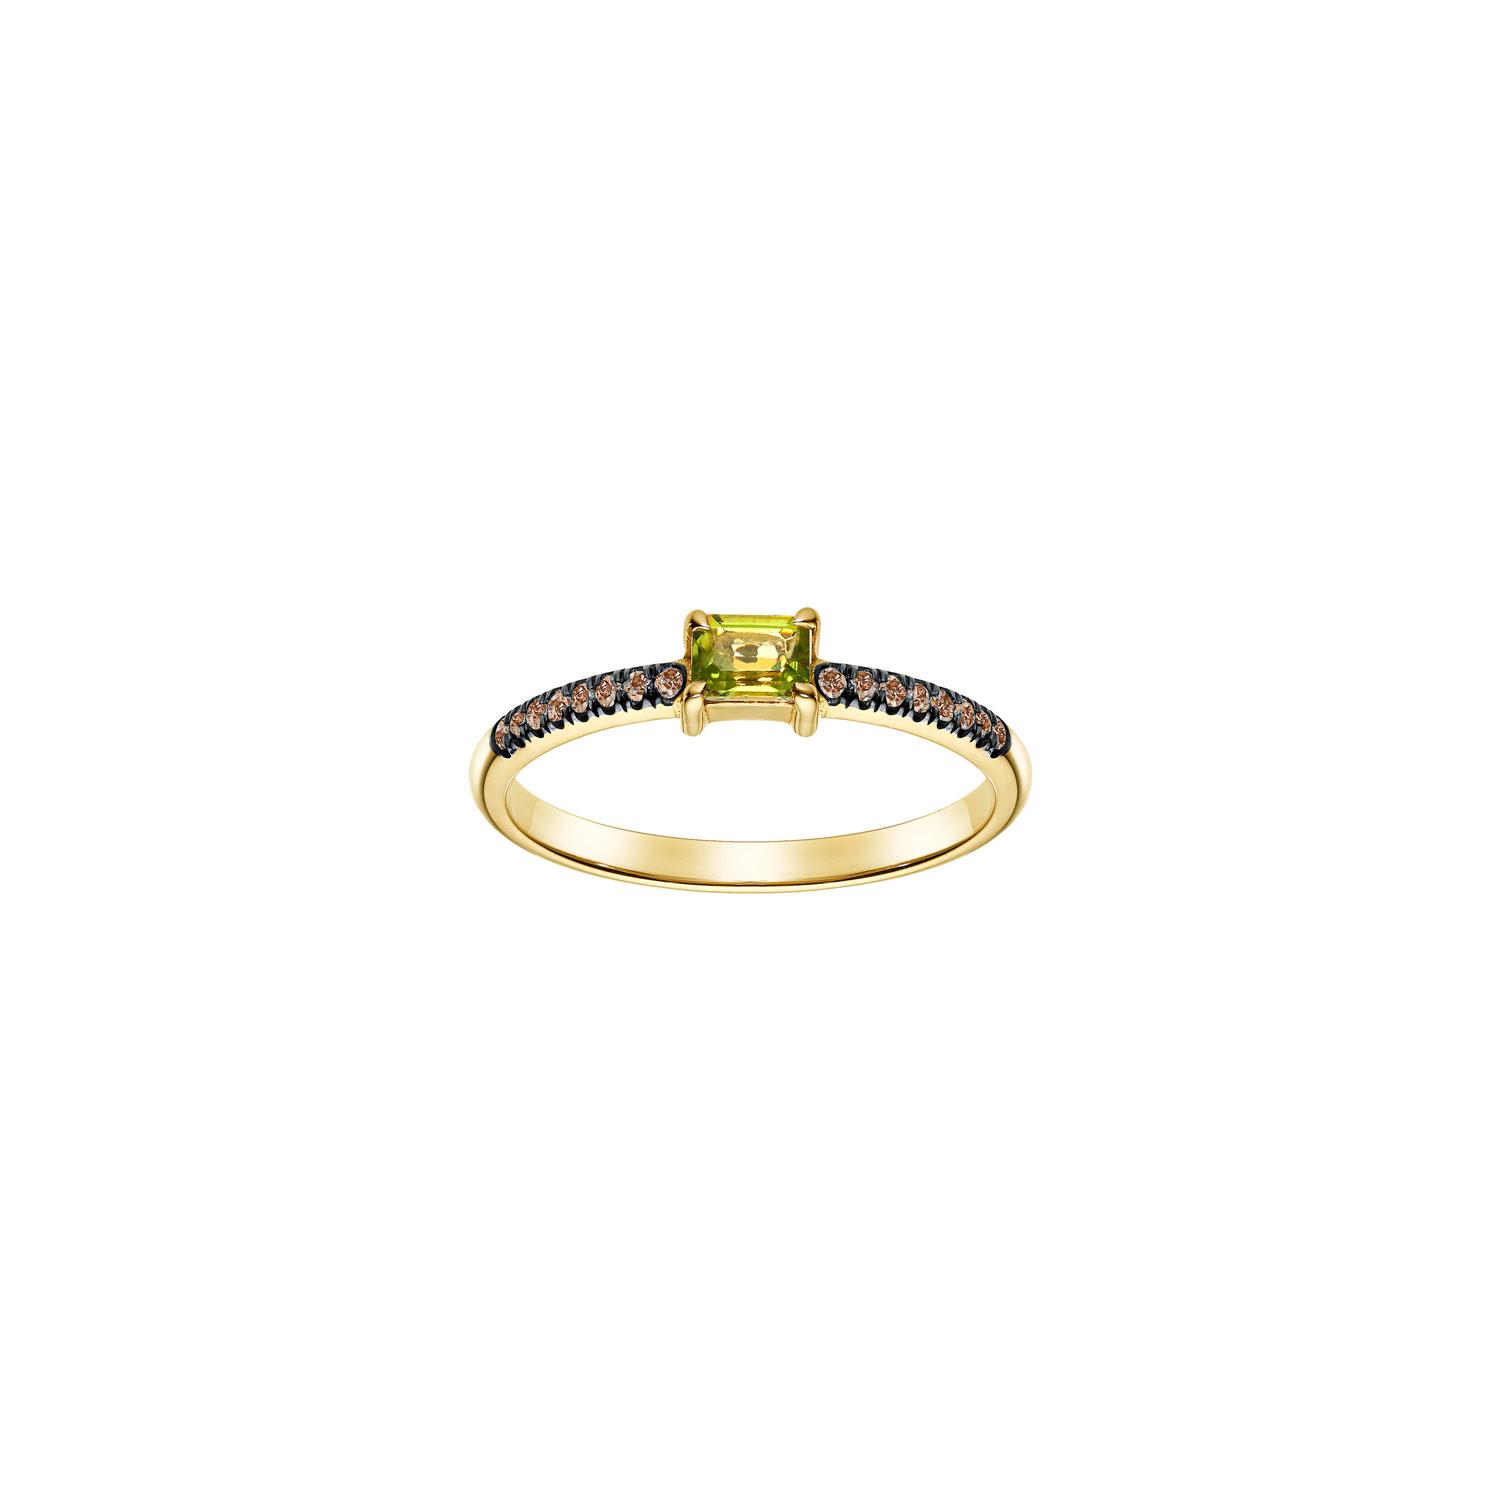 Ring Peridot Baguette und Diamanten 18kt Gelbgold - Lefteris Margaritis - RMC001-perbrd